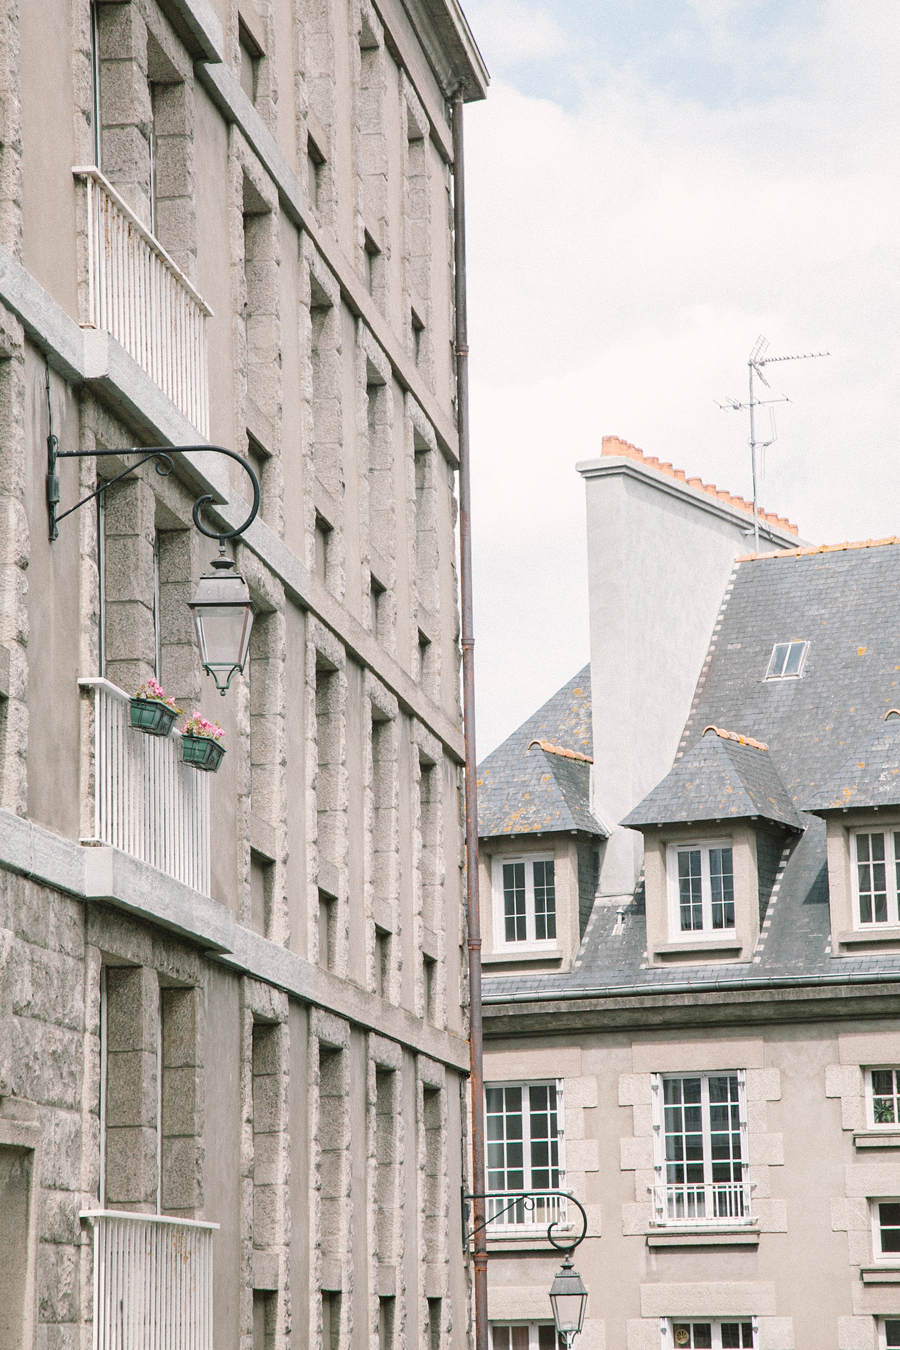 City Buildings of Saint-Malo